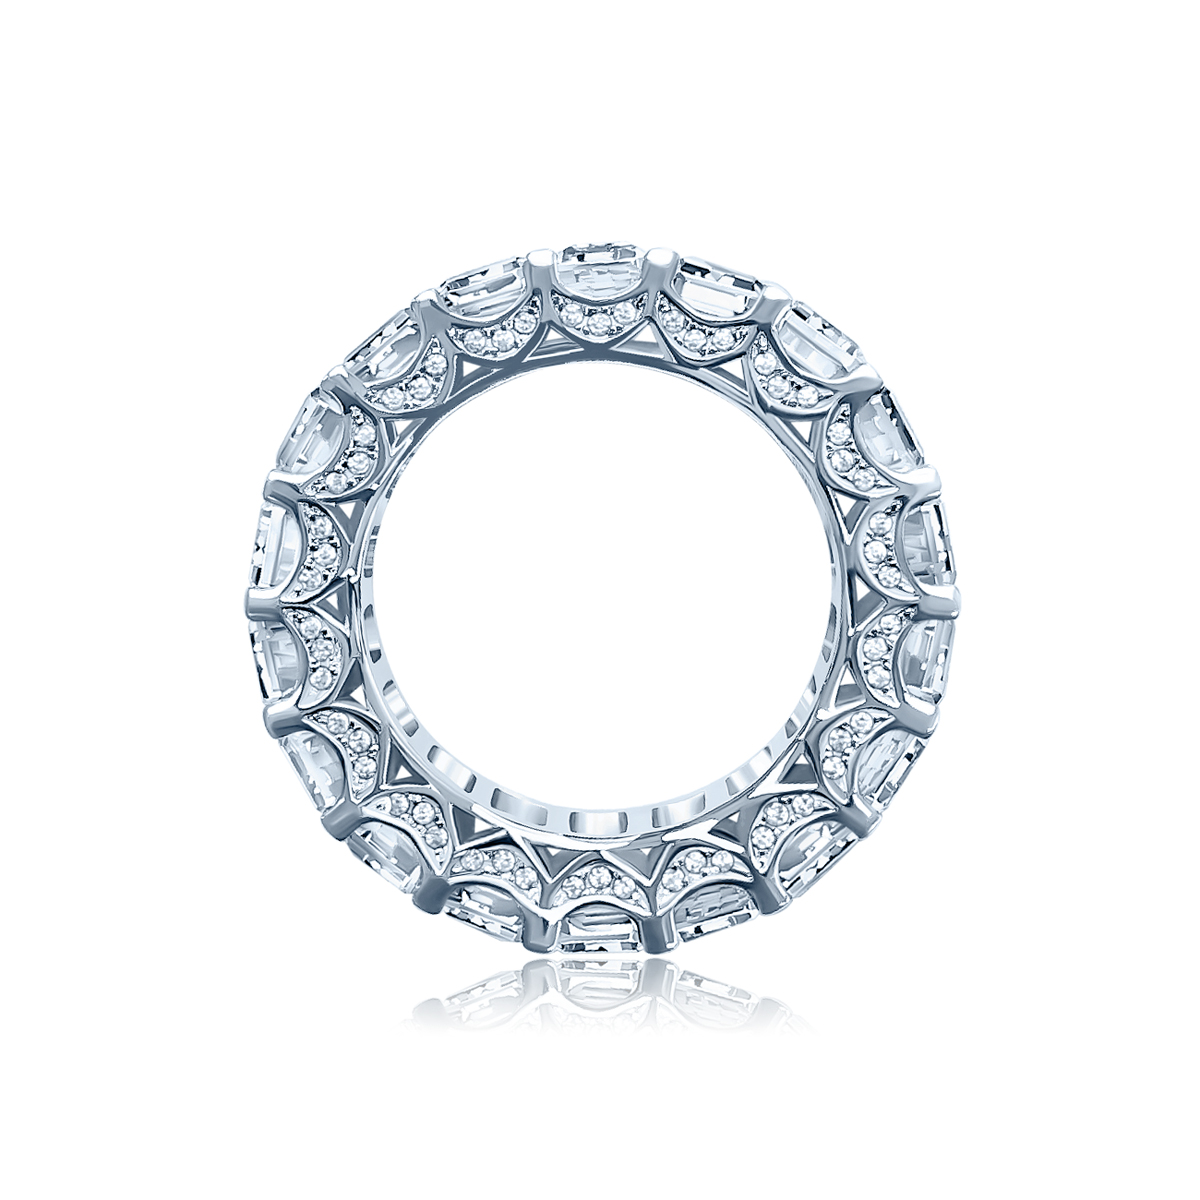 Ring Eternity oval cut. Silver 925, CZ. KOJEWELRY  610133